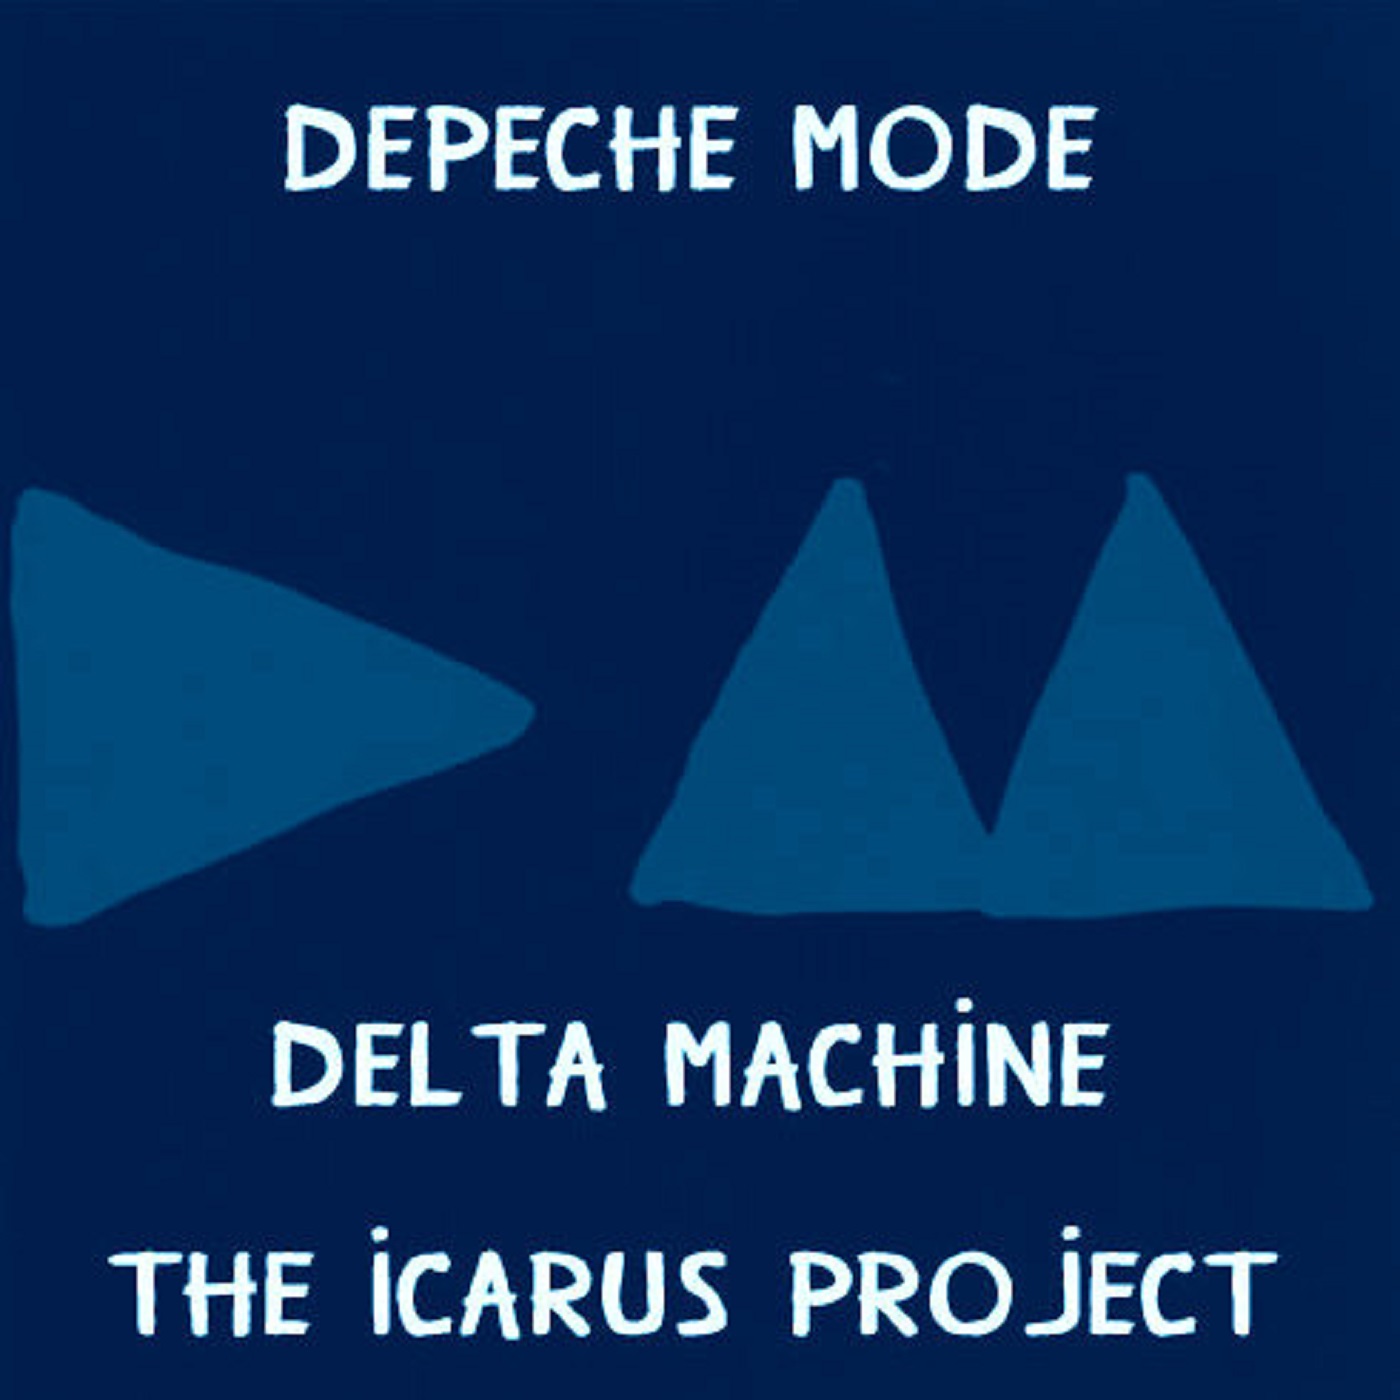 depeche mode delta machine deluxe